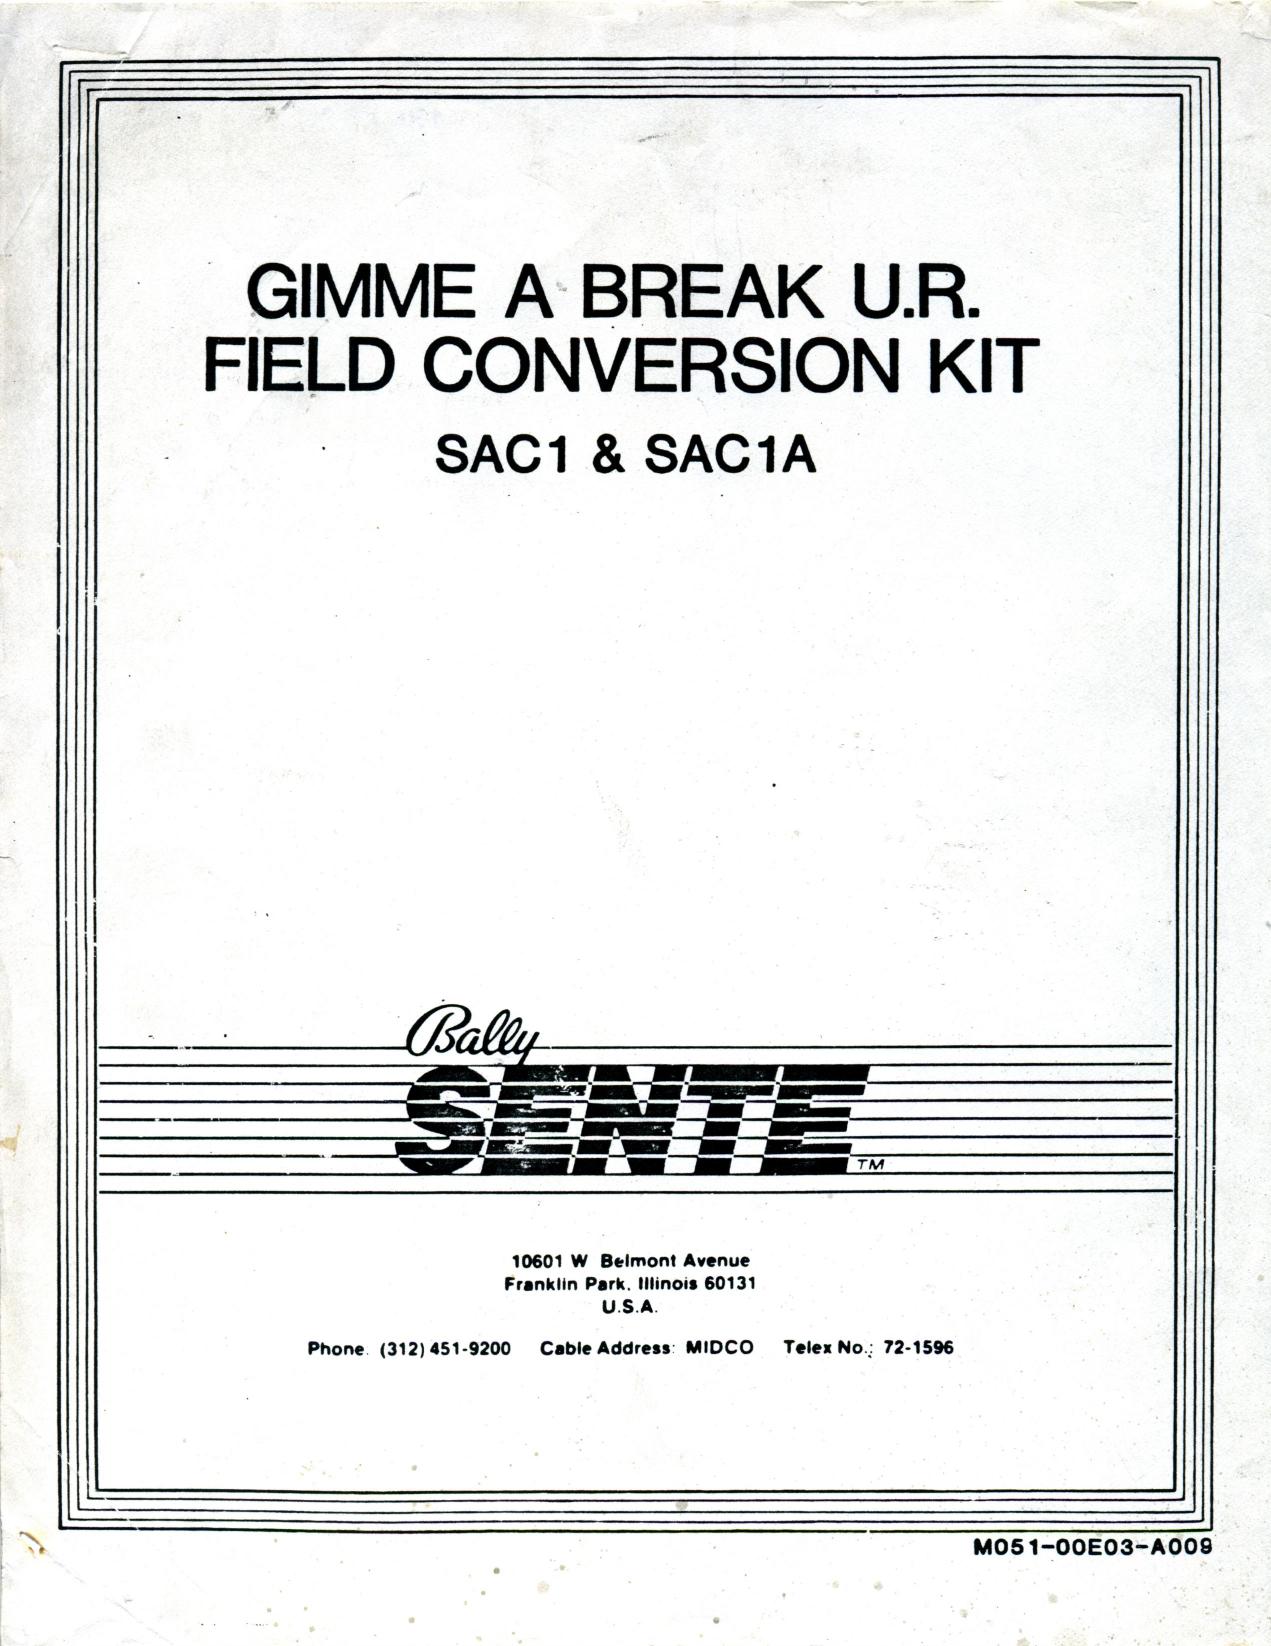 Gimme A Break U.R. Field Conversion Kit SAC1 & SAC1A (M051-00E03-A009)